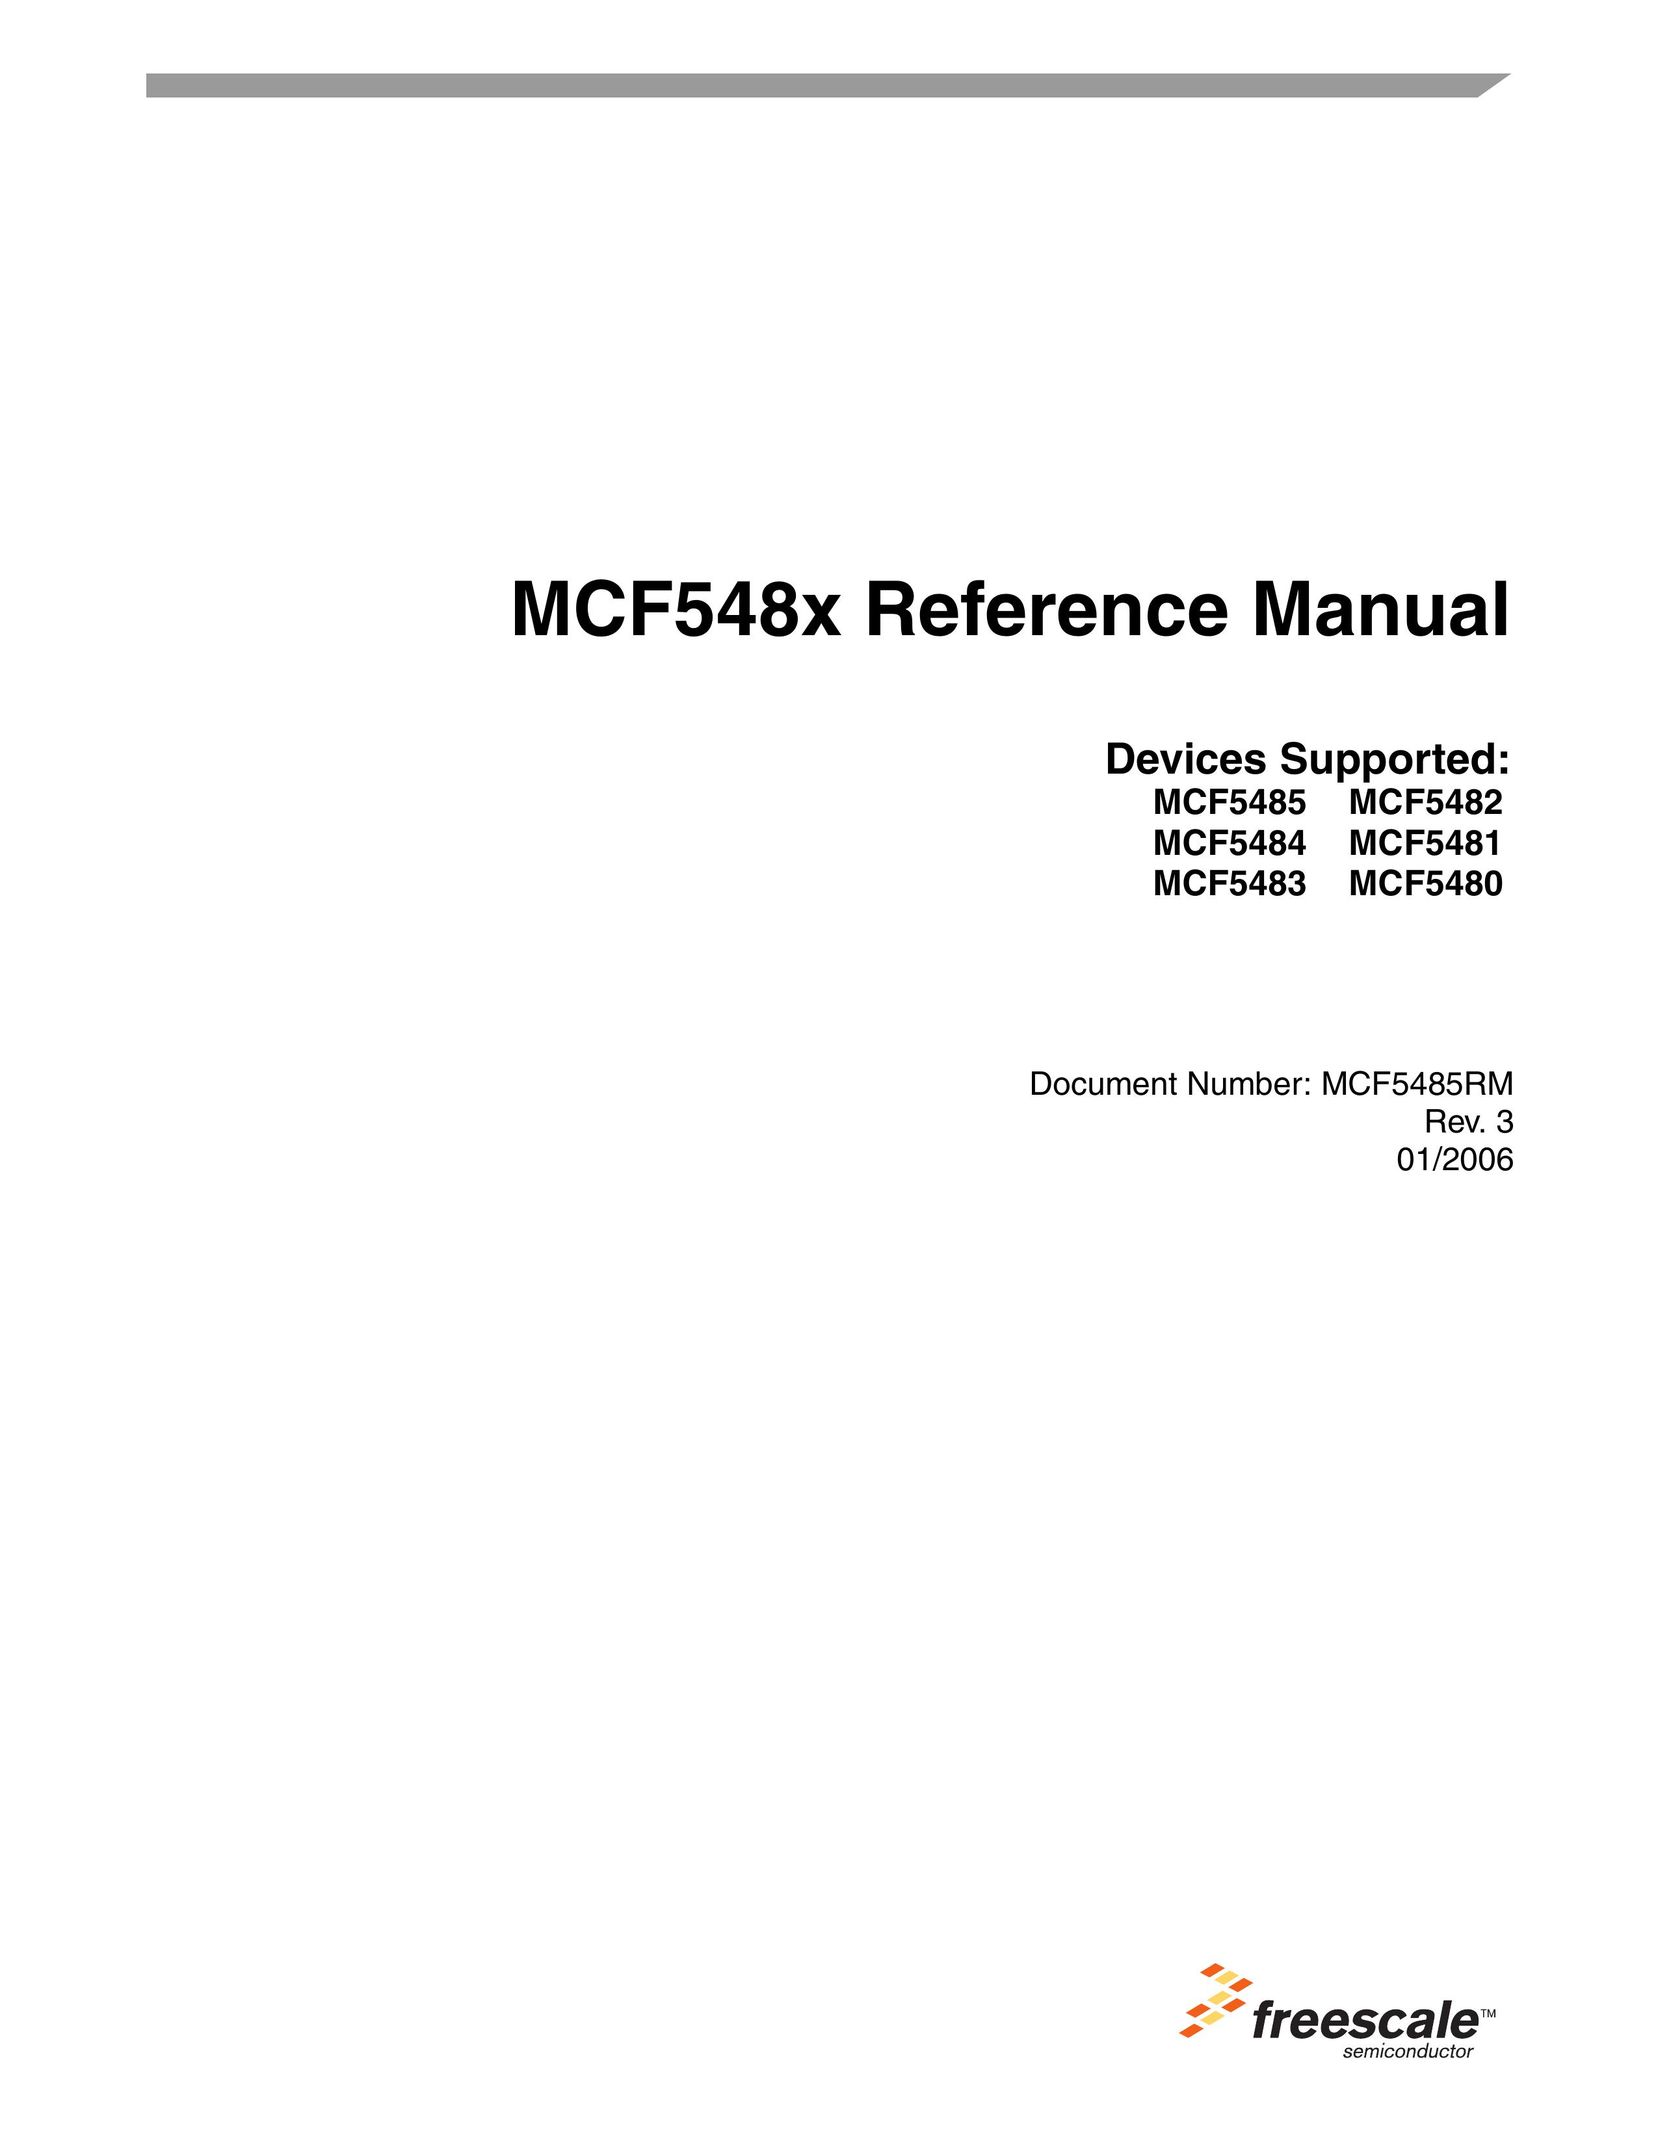 Freescale Semiconductor MCF5484 Computer Hardware User Manual